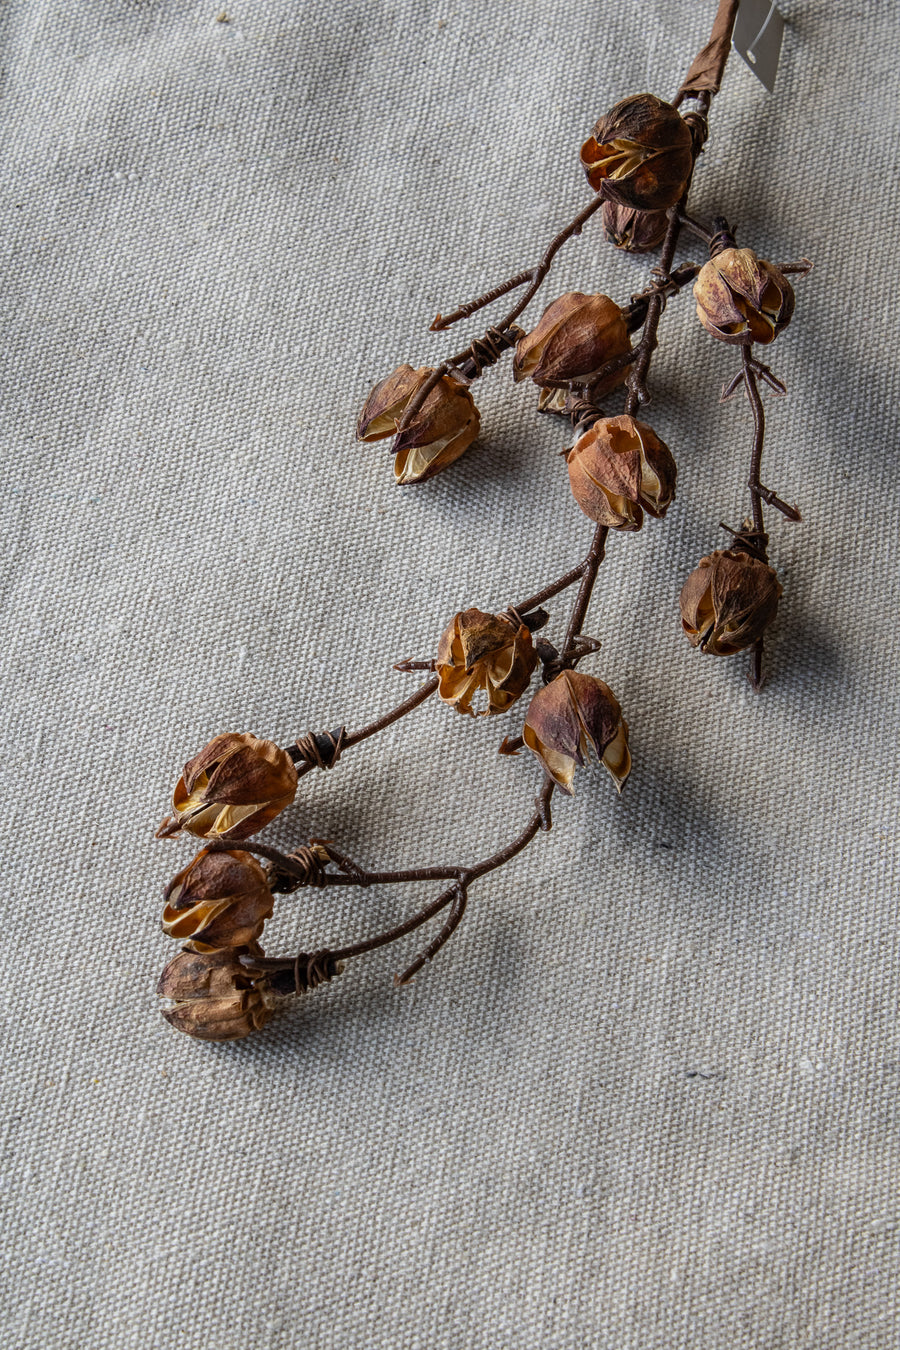 Dried Cotton Pod Botanical Stem